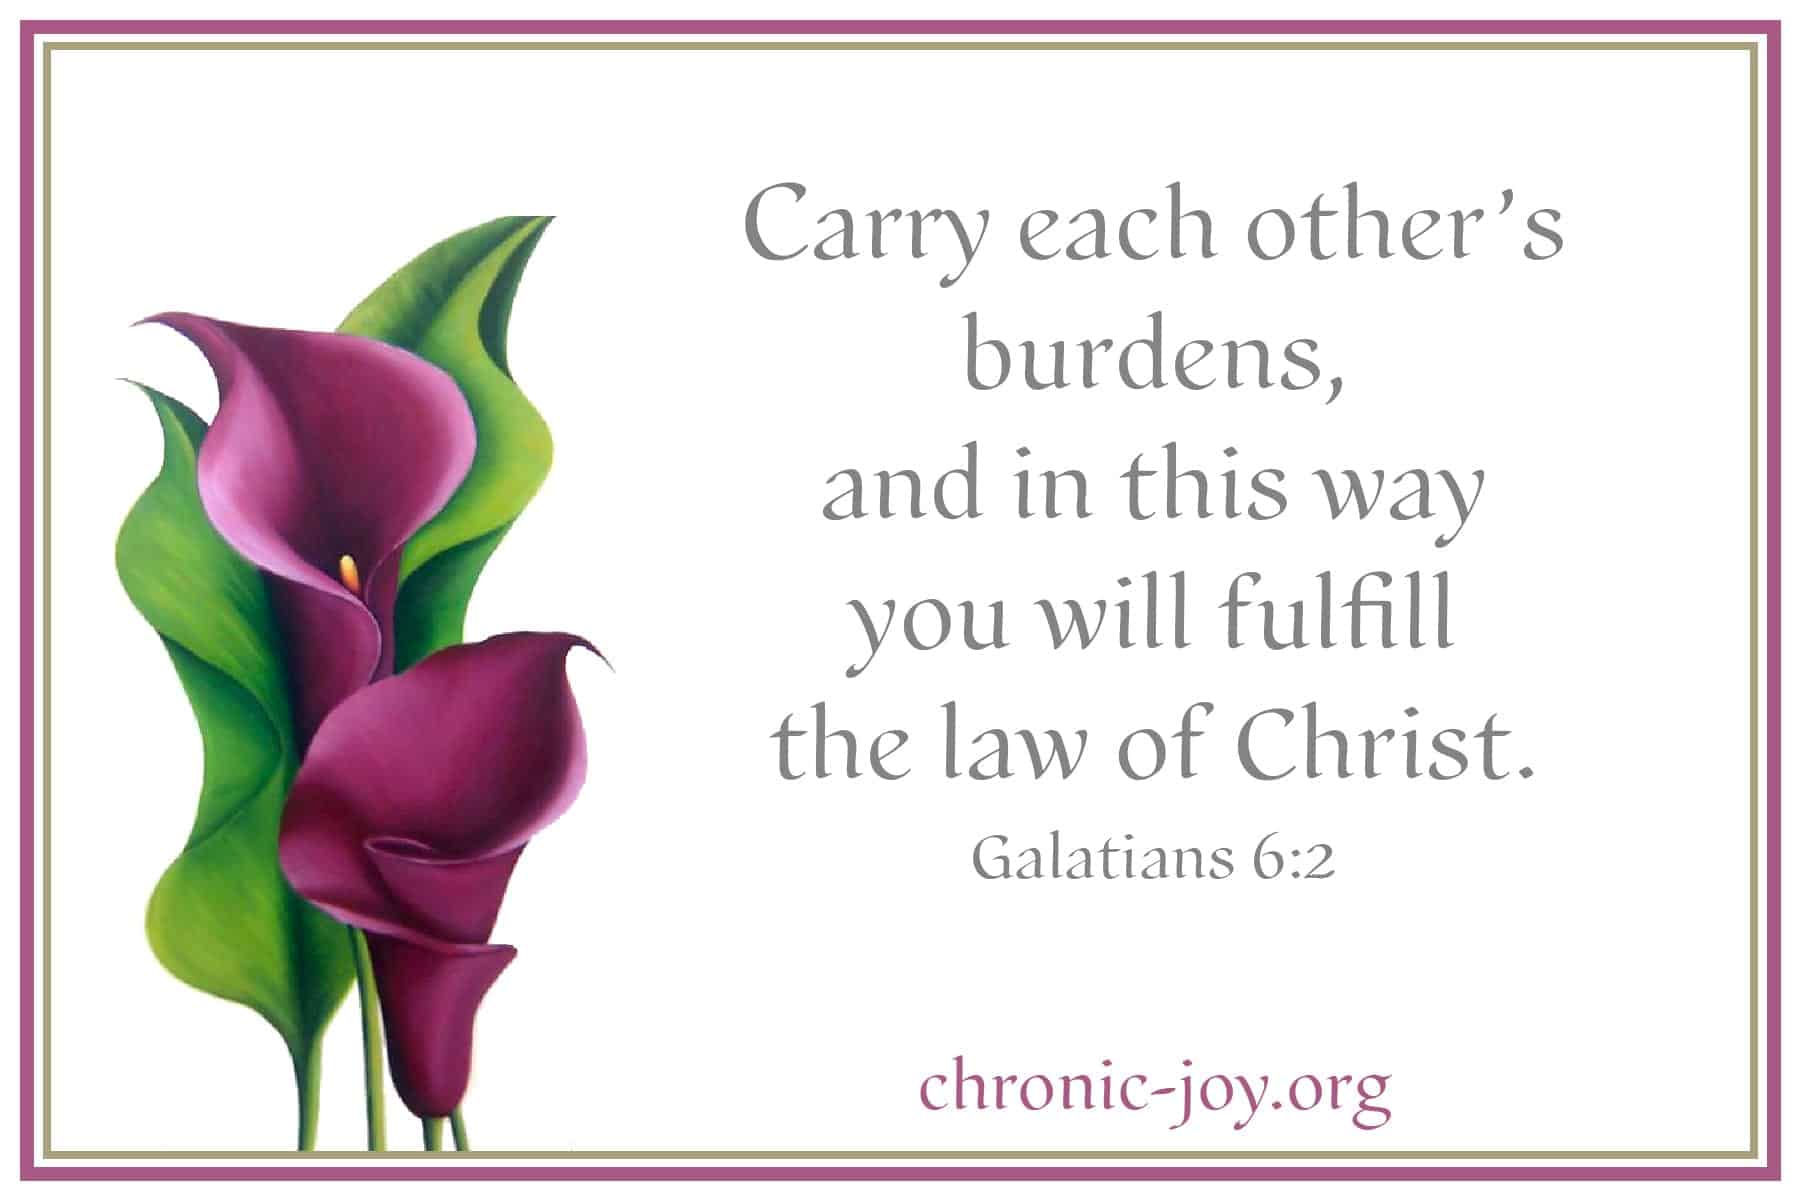 Carry each other’s burdens - Galatians 6:2